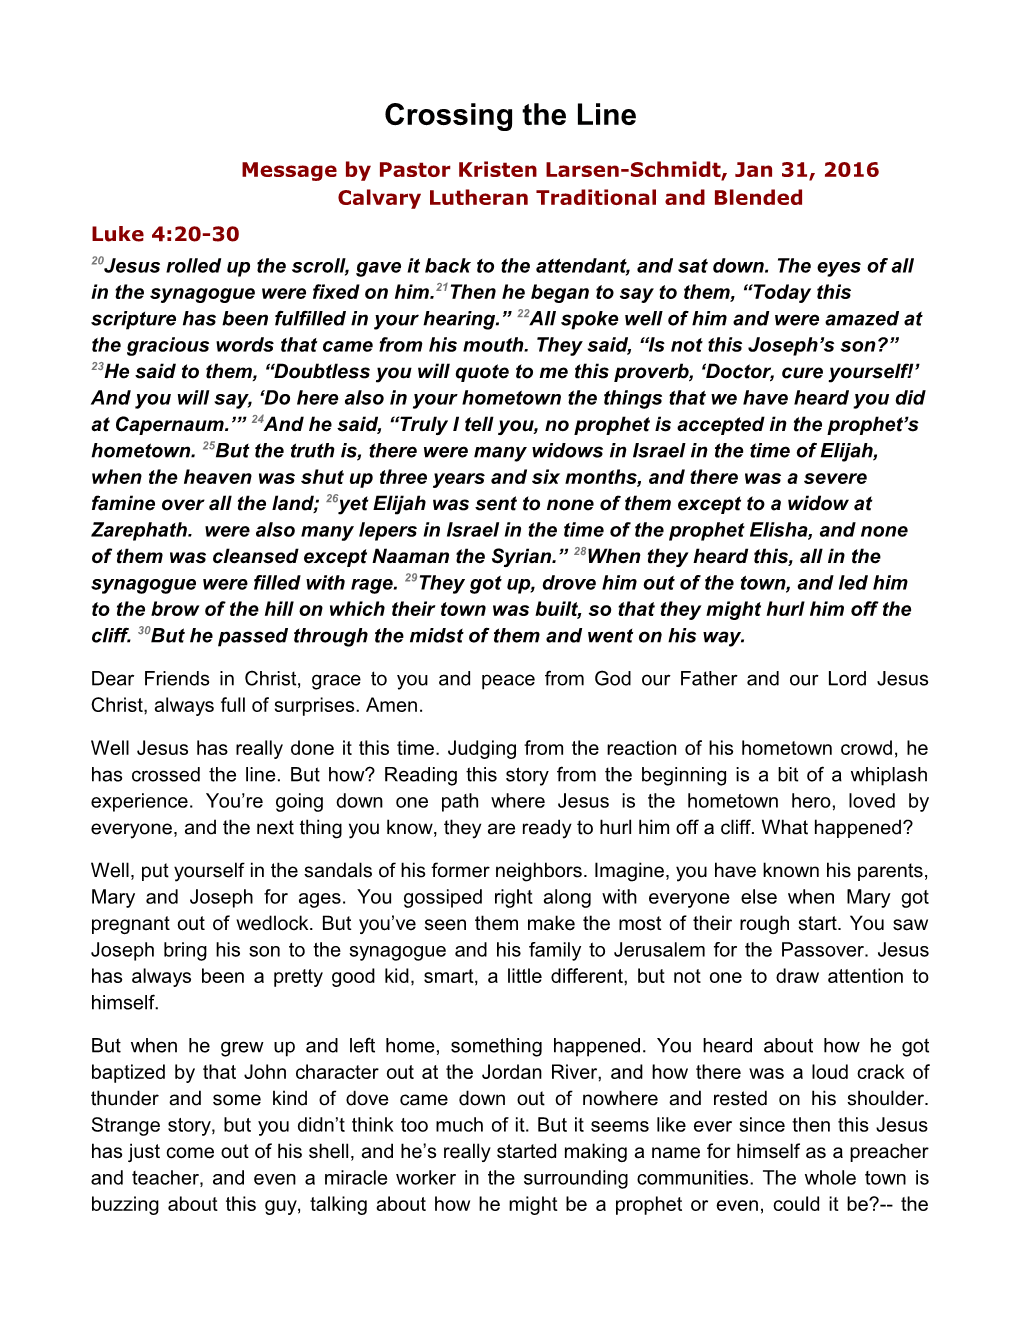 Message by Pastor Kristen Larsen-Schmidt, Jan 31, 2016 Calvary Lutheran Traditional And